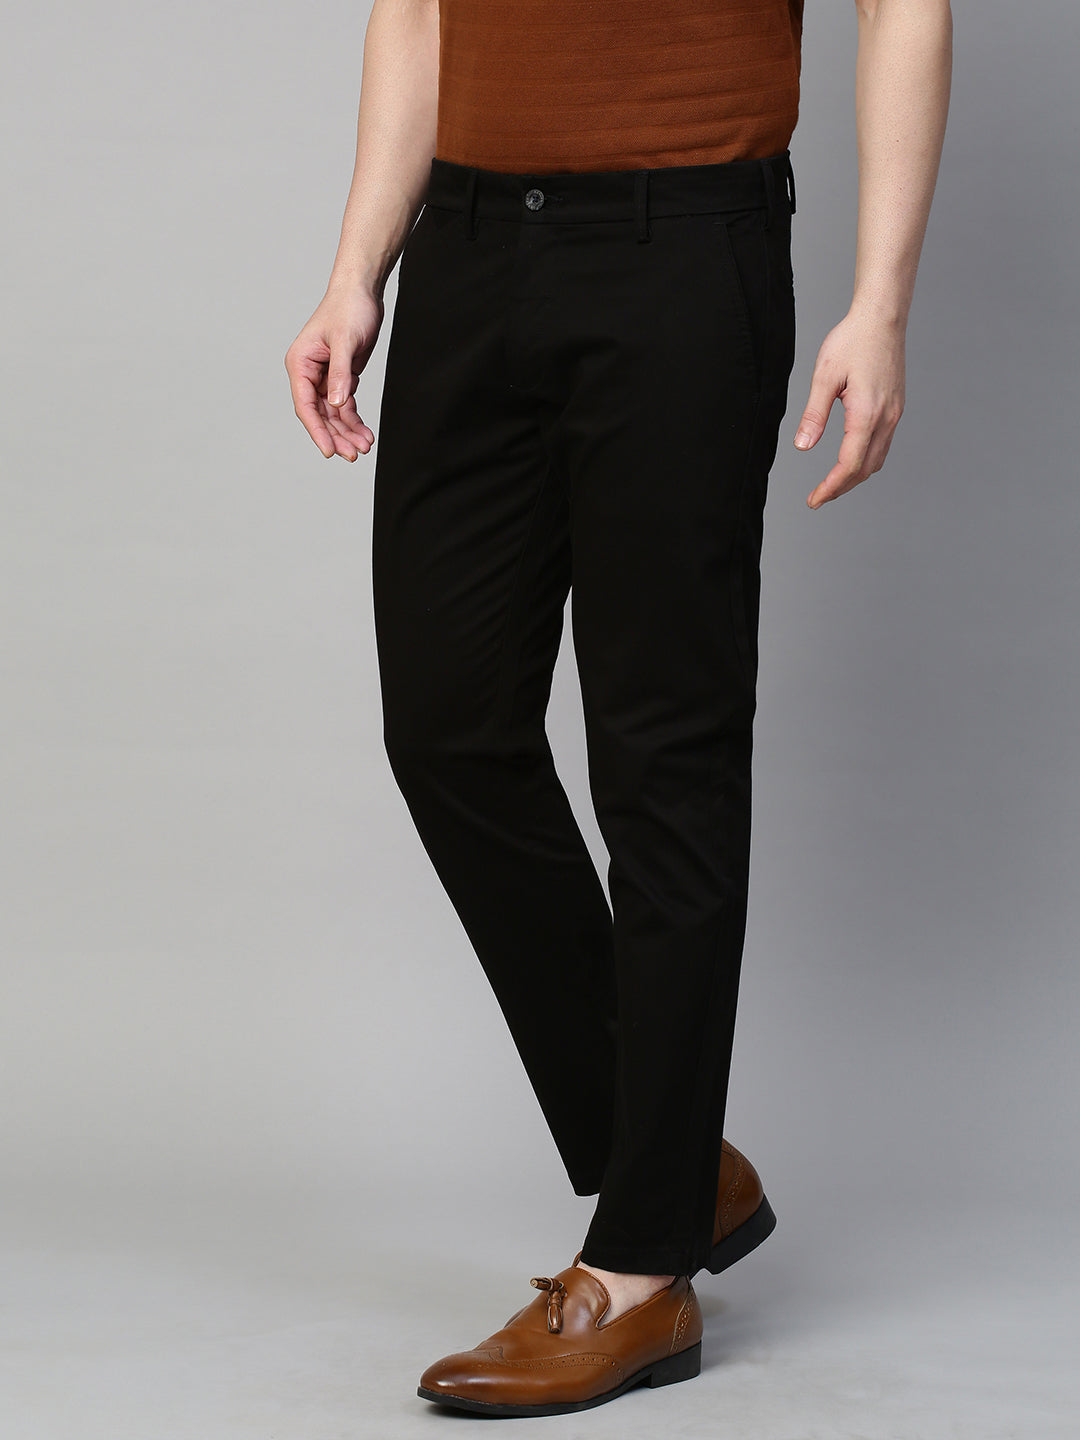 Genips Men's Black Stretch Caribbean Slim Fit Solid Trousers